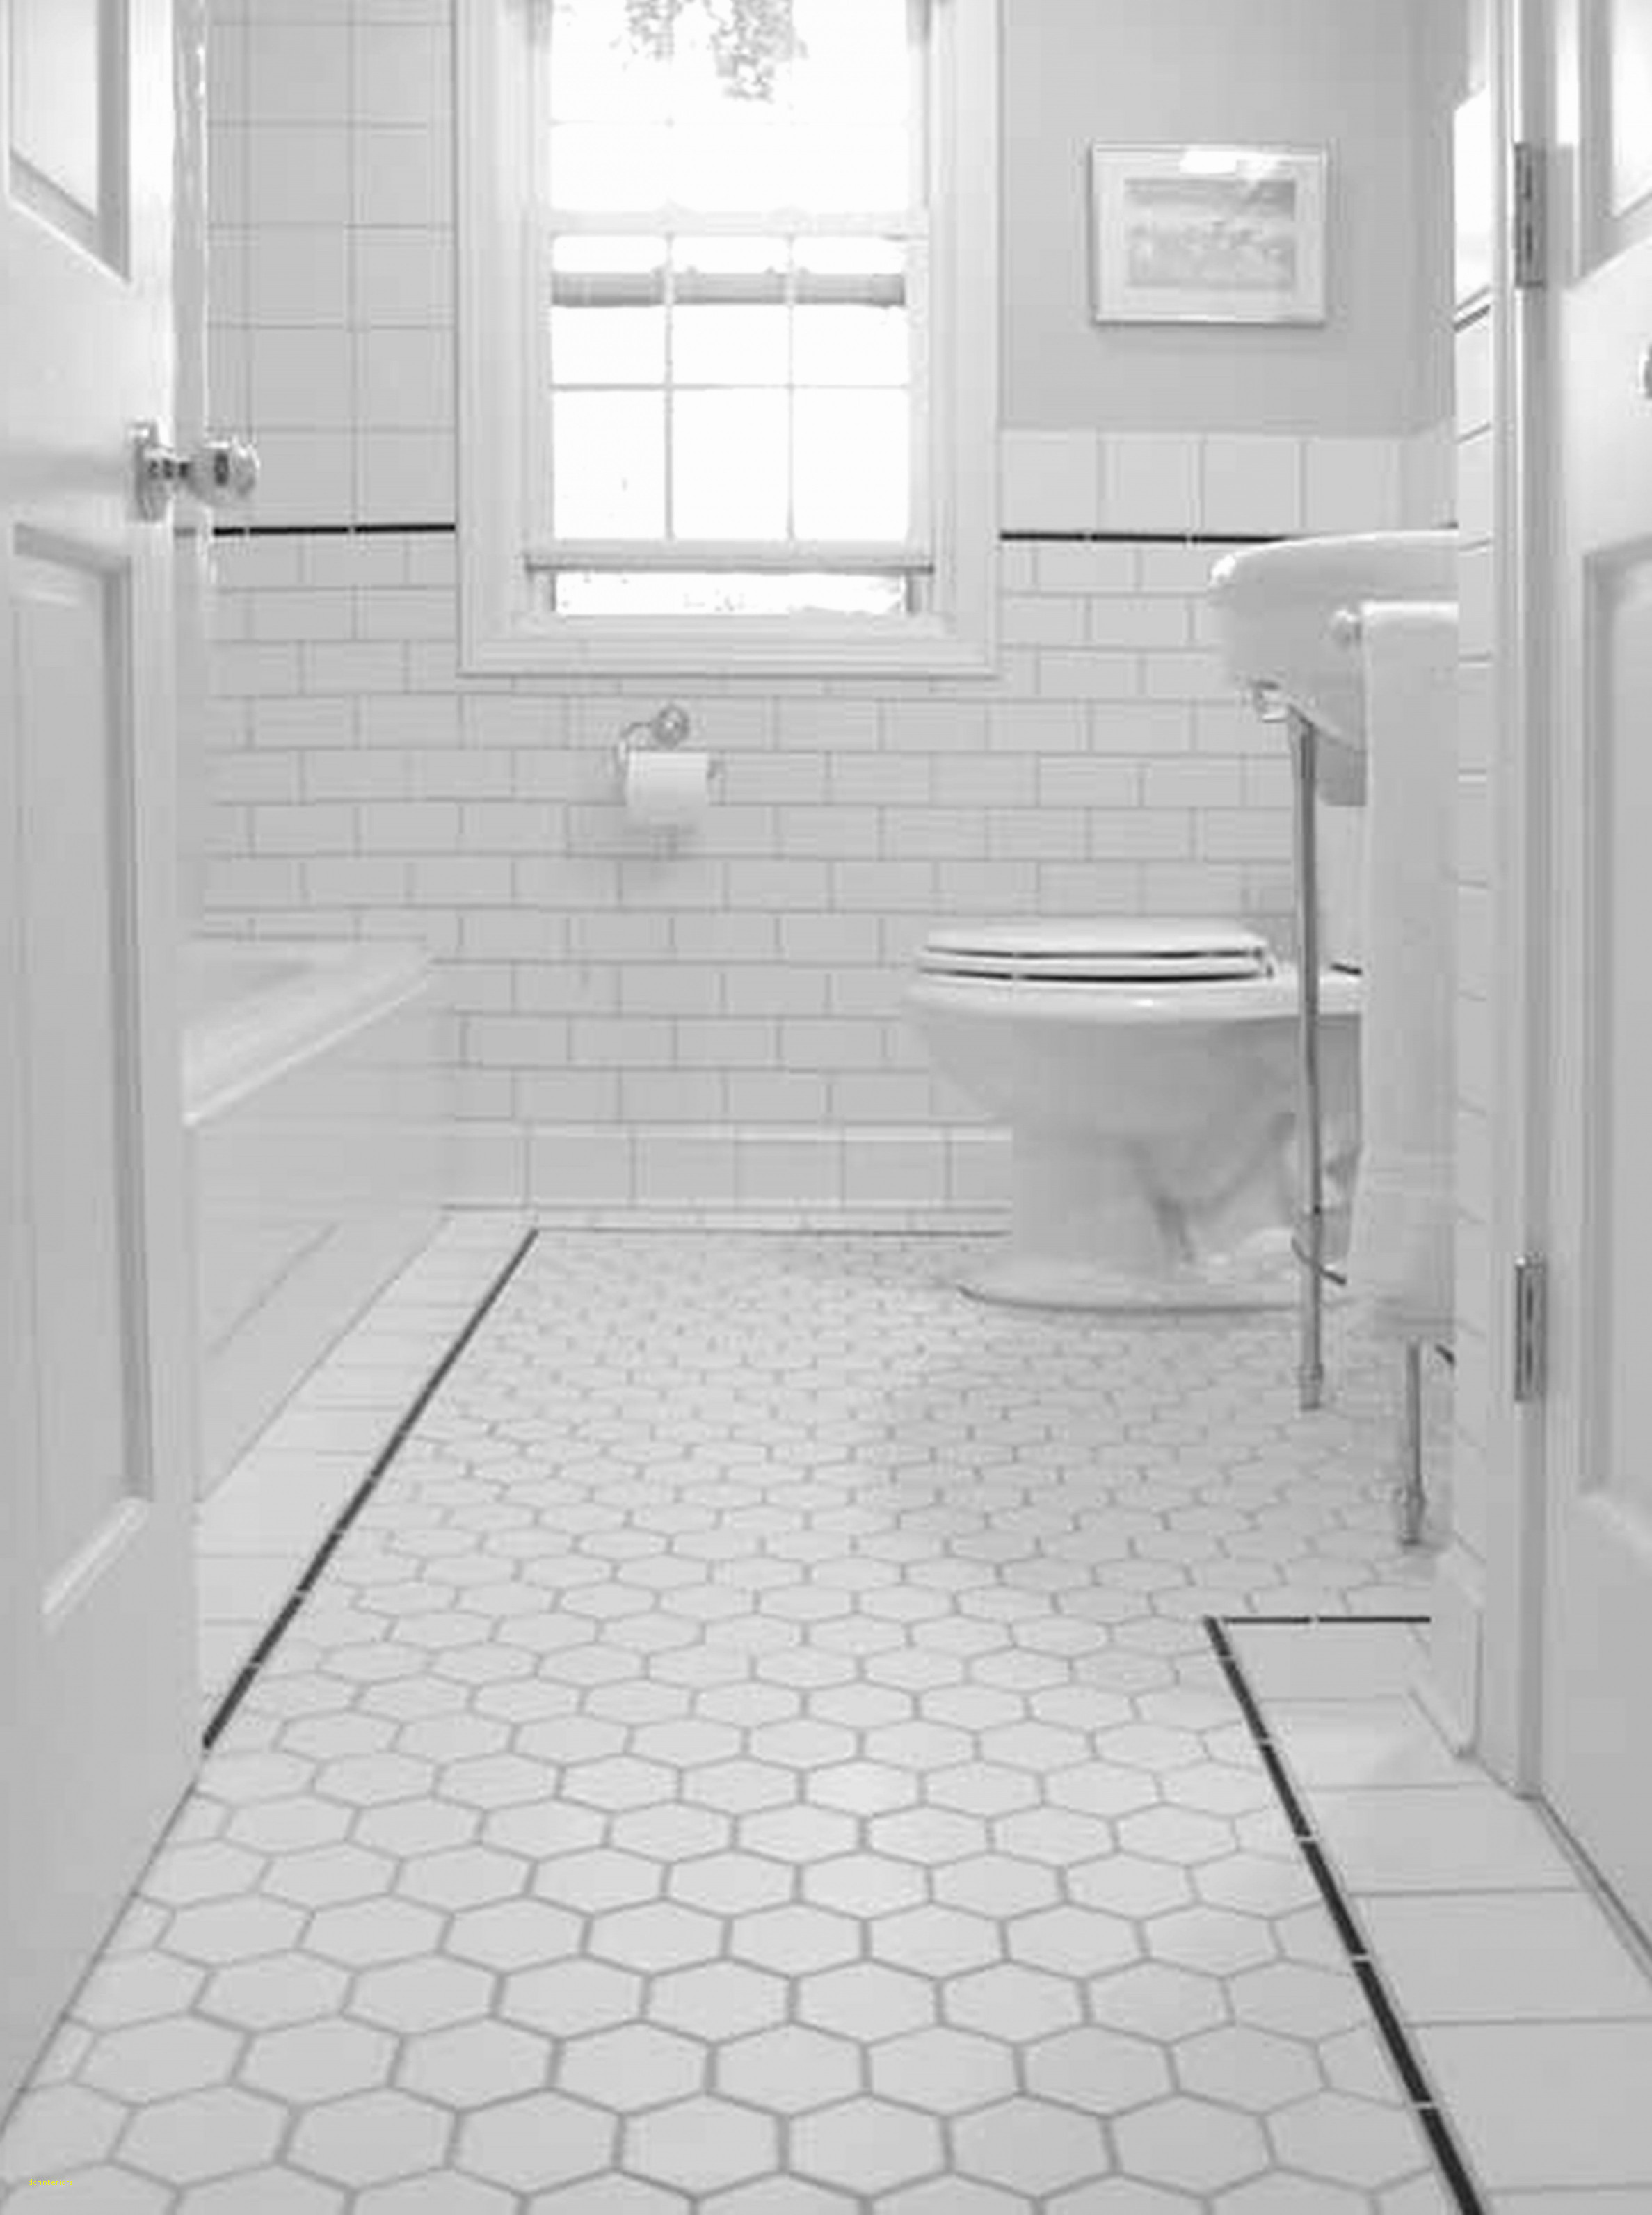 11 Best Hardwood Floor Tile In Bathroom 2022 free download hardwood floor tile in bathroom of 37 fascinating tile suppliers design inside laying bathroom floor tiles new stunning inspirational installing faucet h sink new bathroom i 0d decor